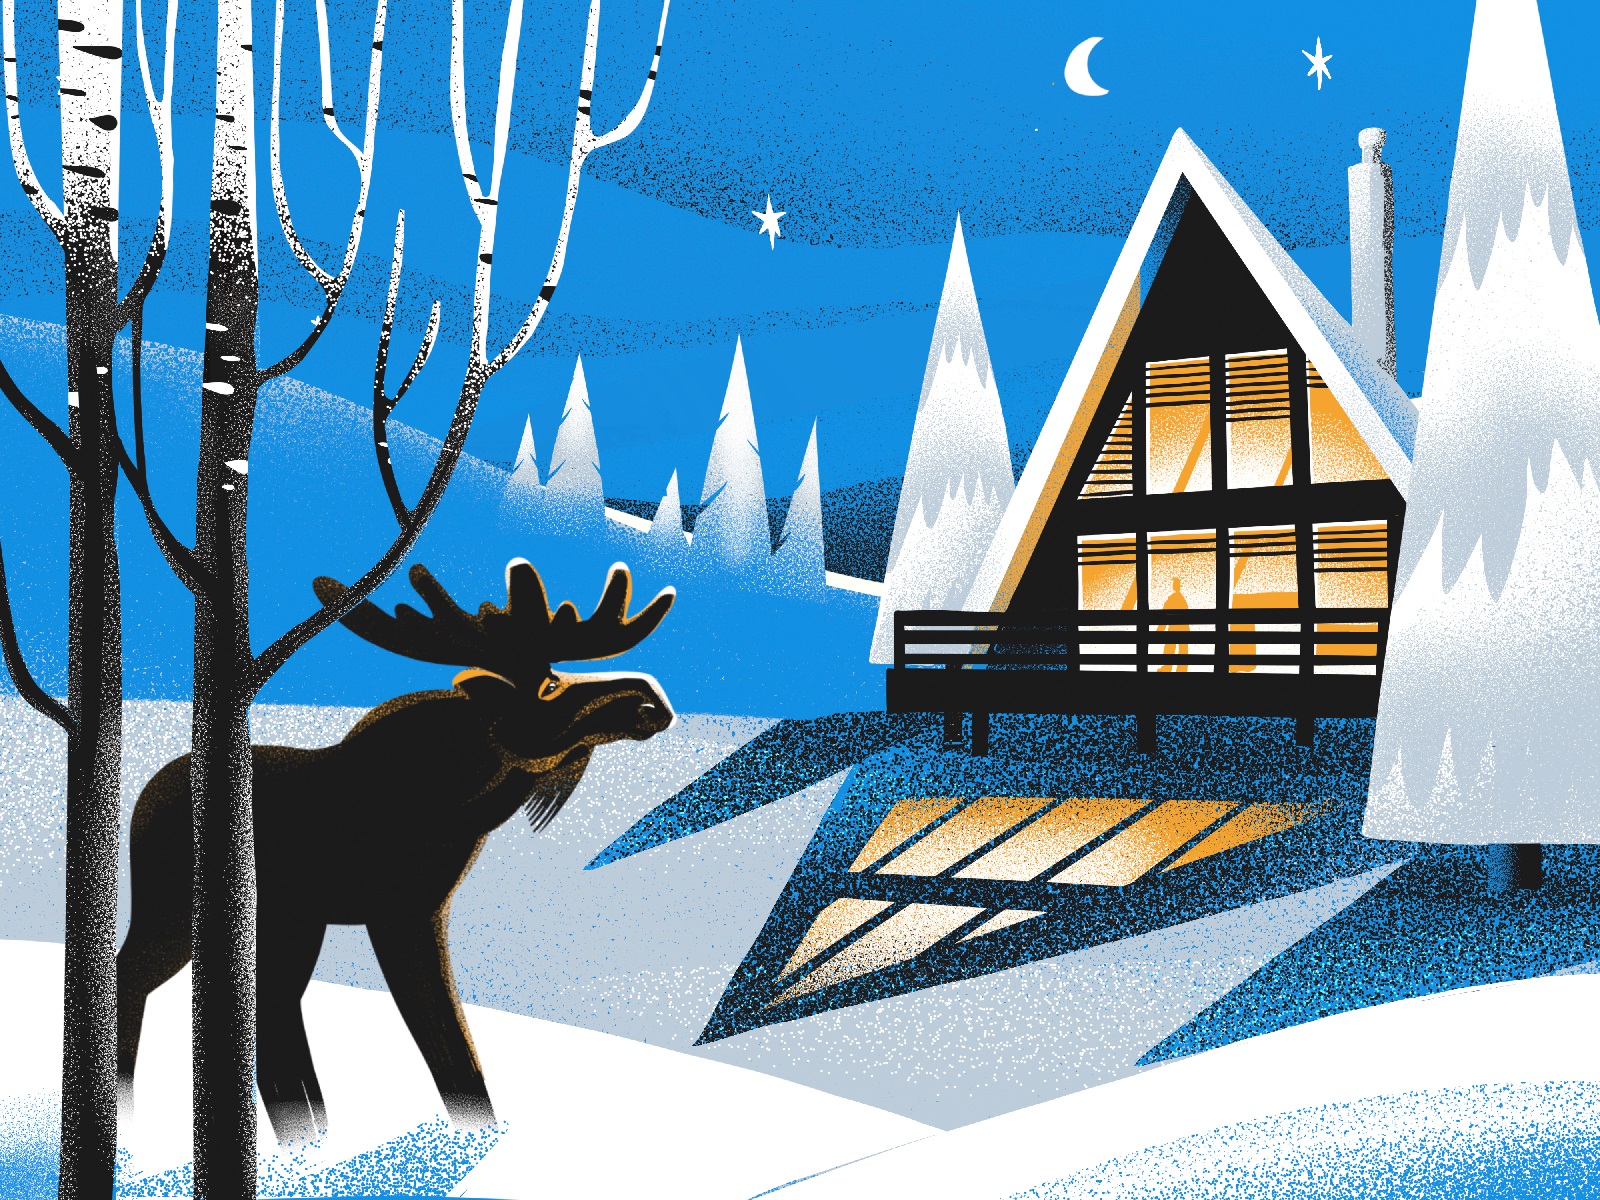 Winter Illustration Wallpapers